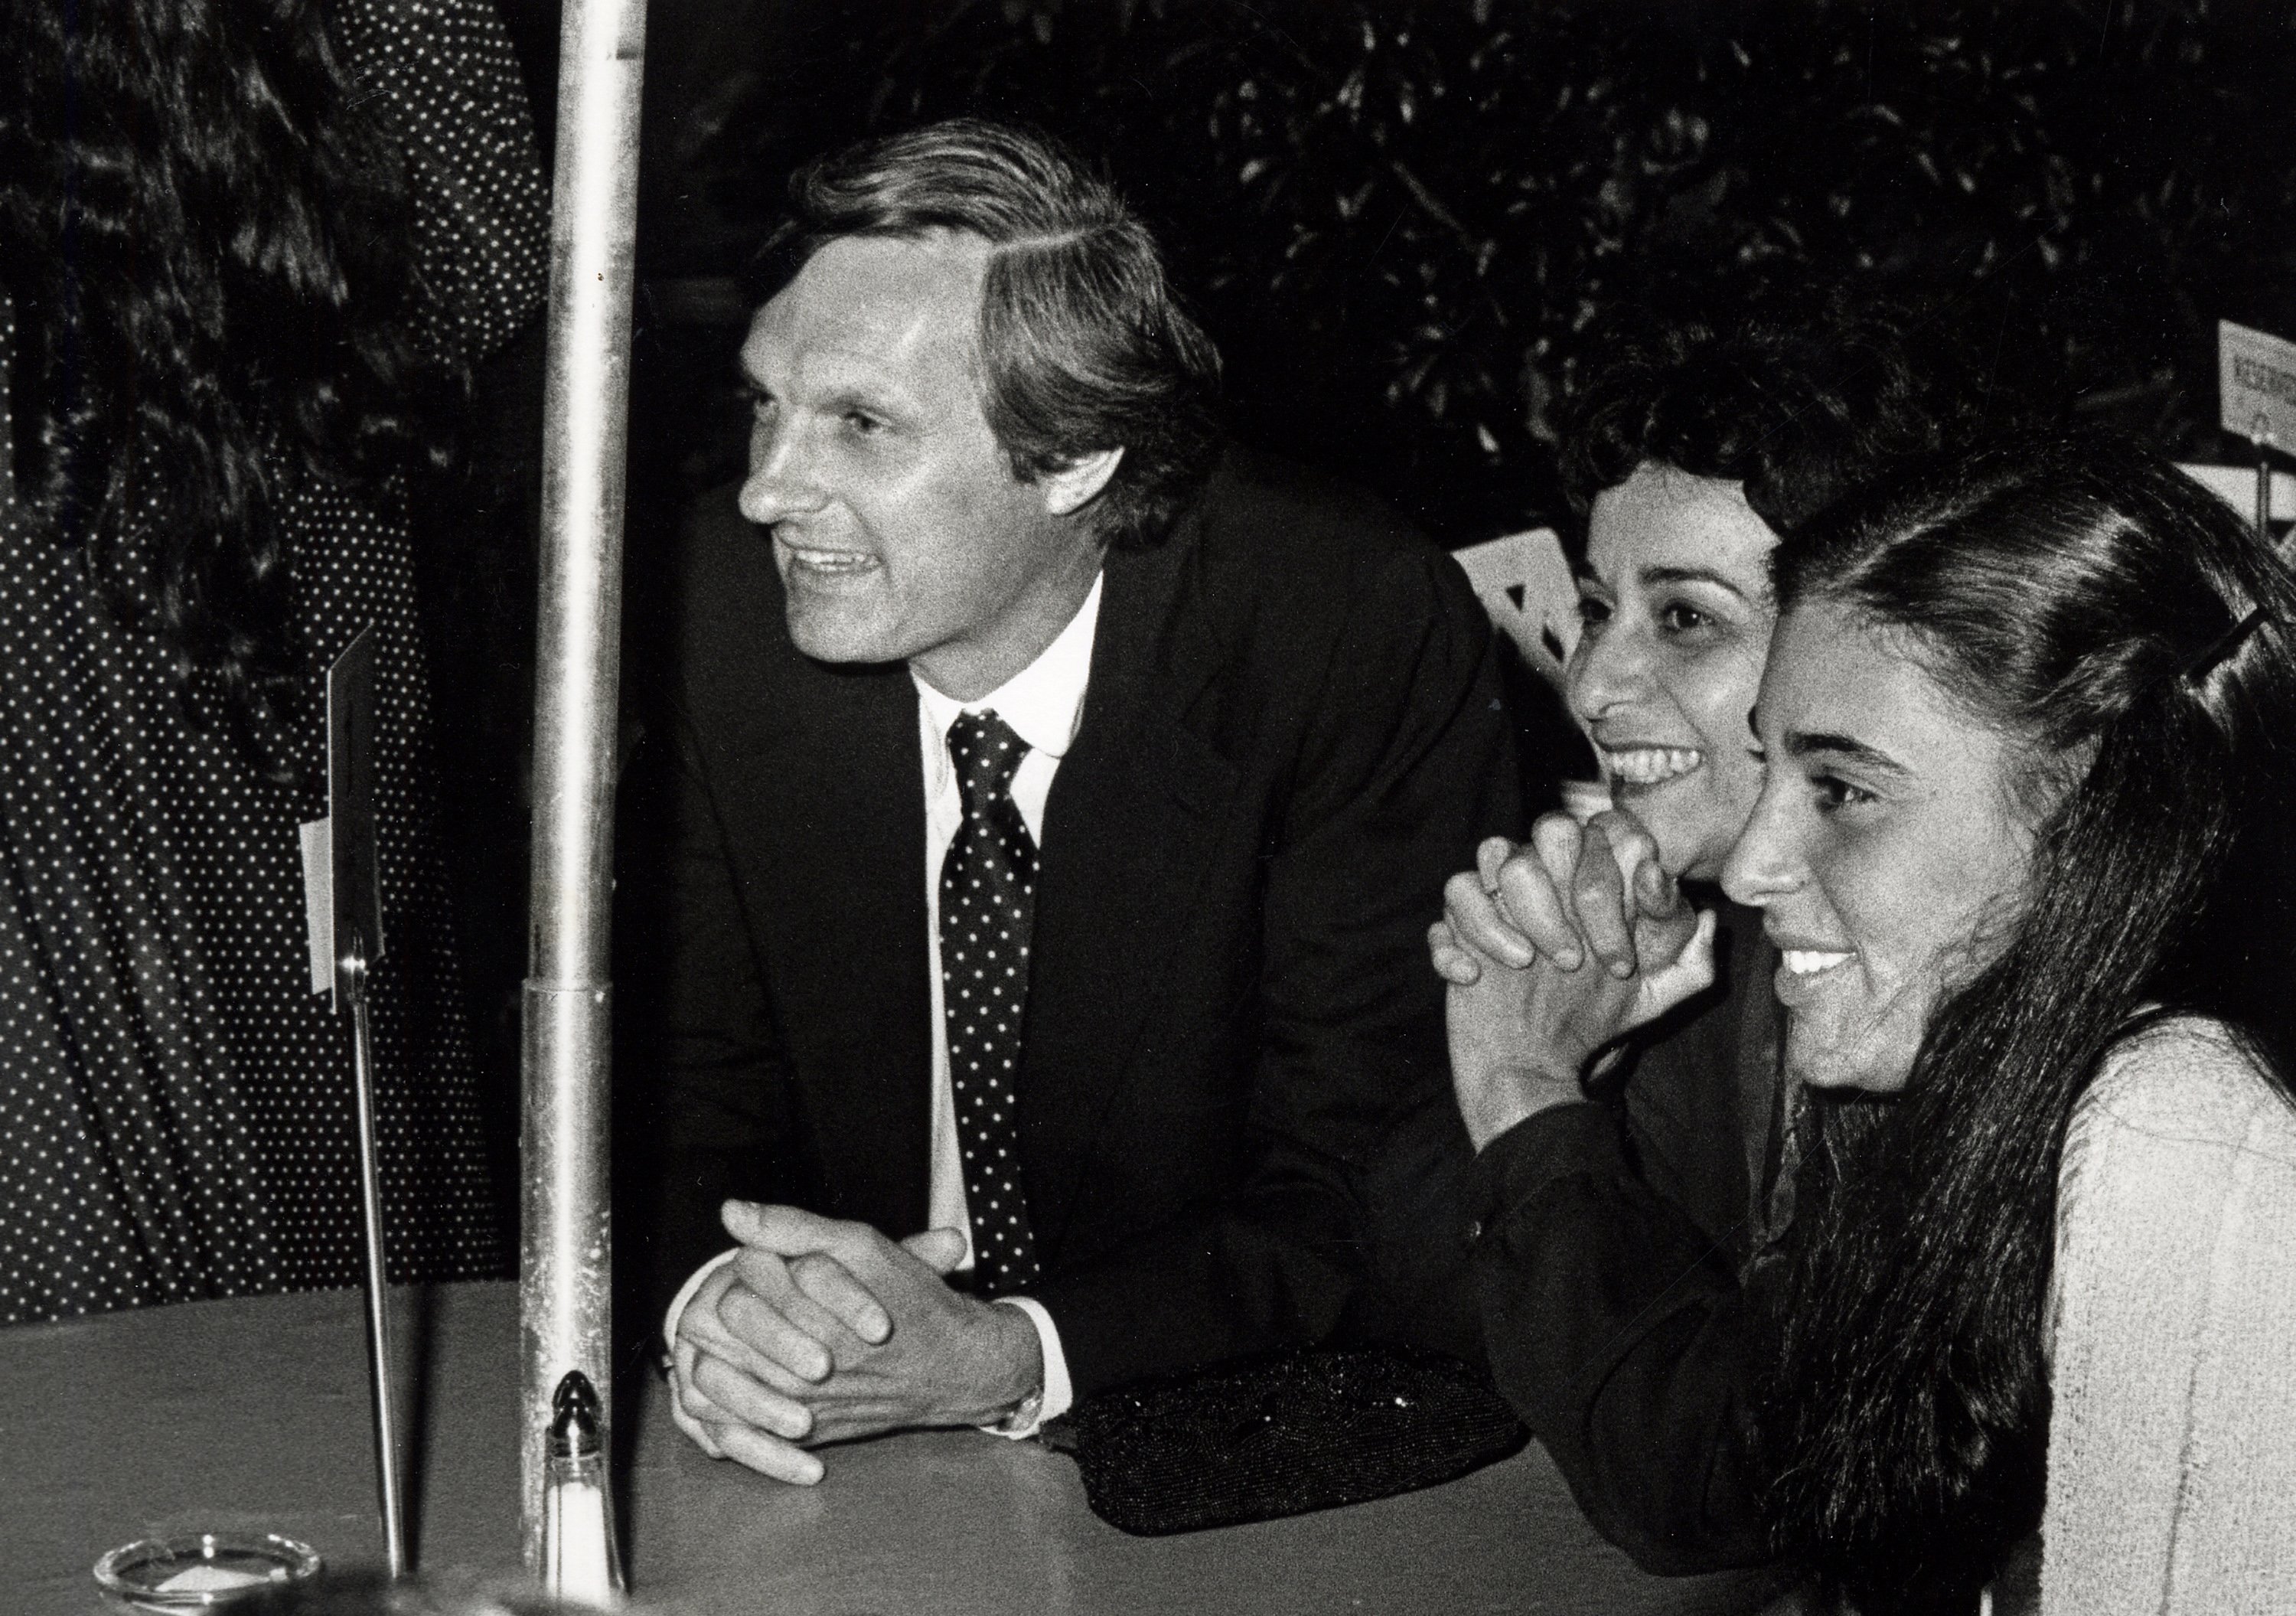 Alan, Arlene, and Beatrice Alda during "The Seduction of Joe Tynan" New York City premiere party in New York City, New York, on August 15, 1979 | Source: Getty Images